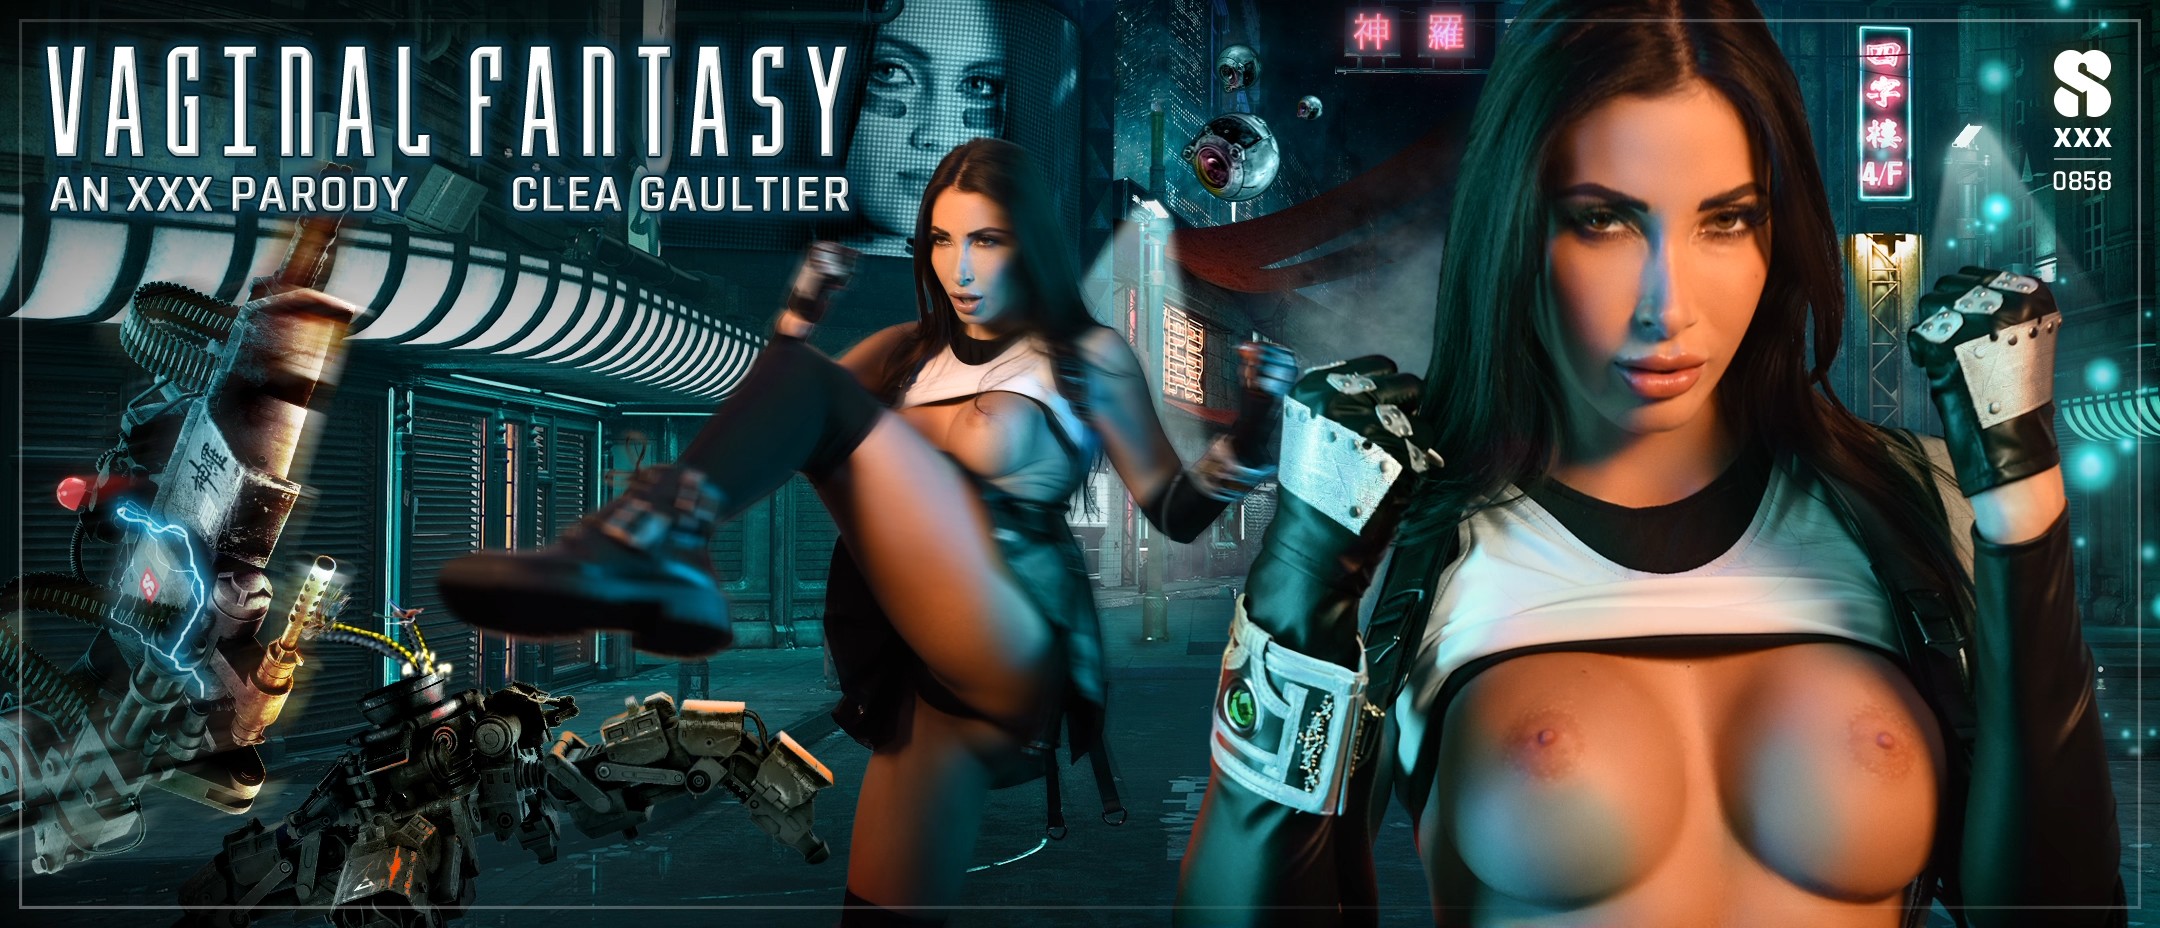 Clea Gaultier - Vaginal Fantasy - Get her now!